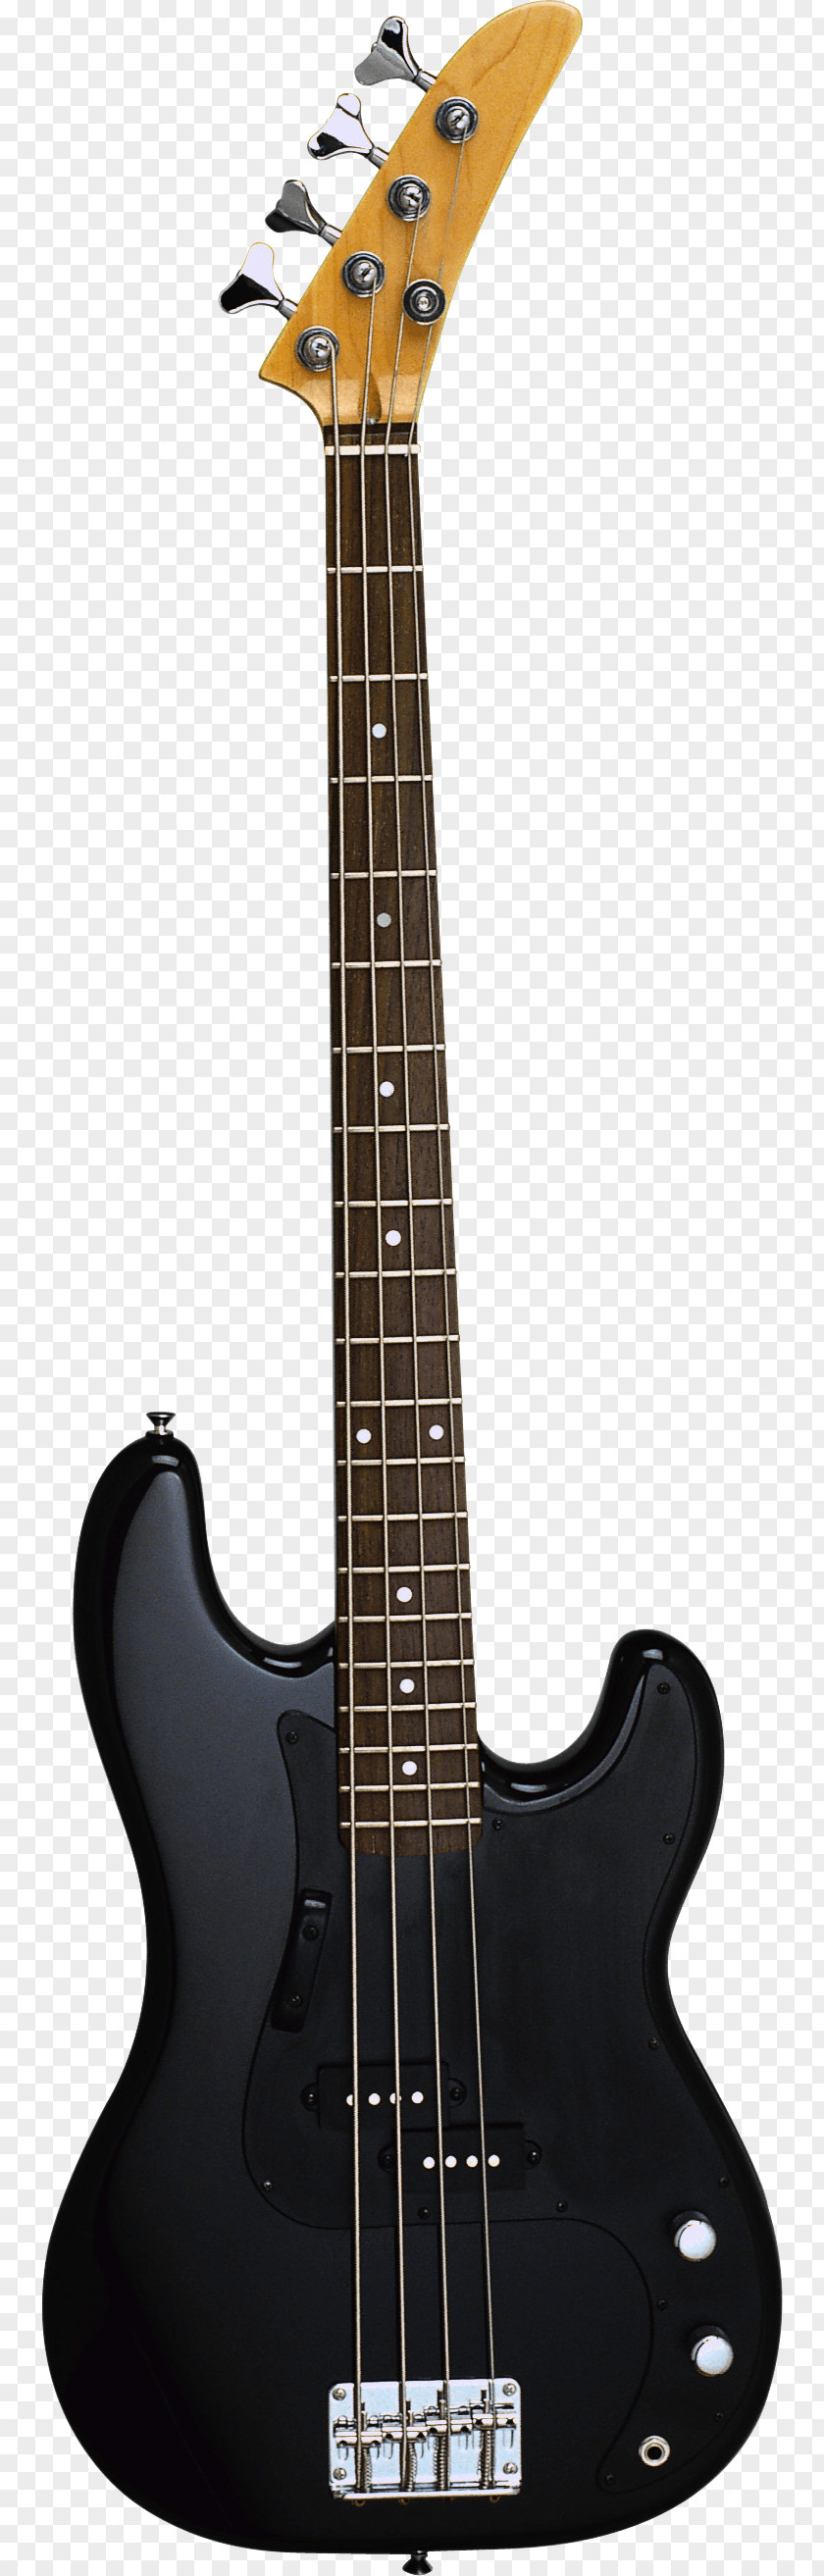 Black Electric Guitar Image PNG